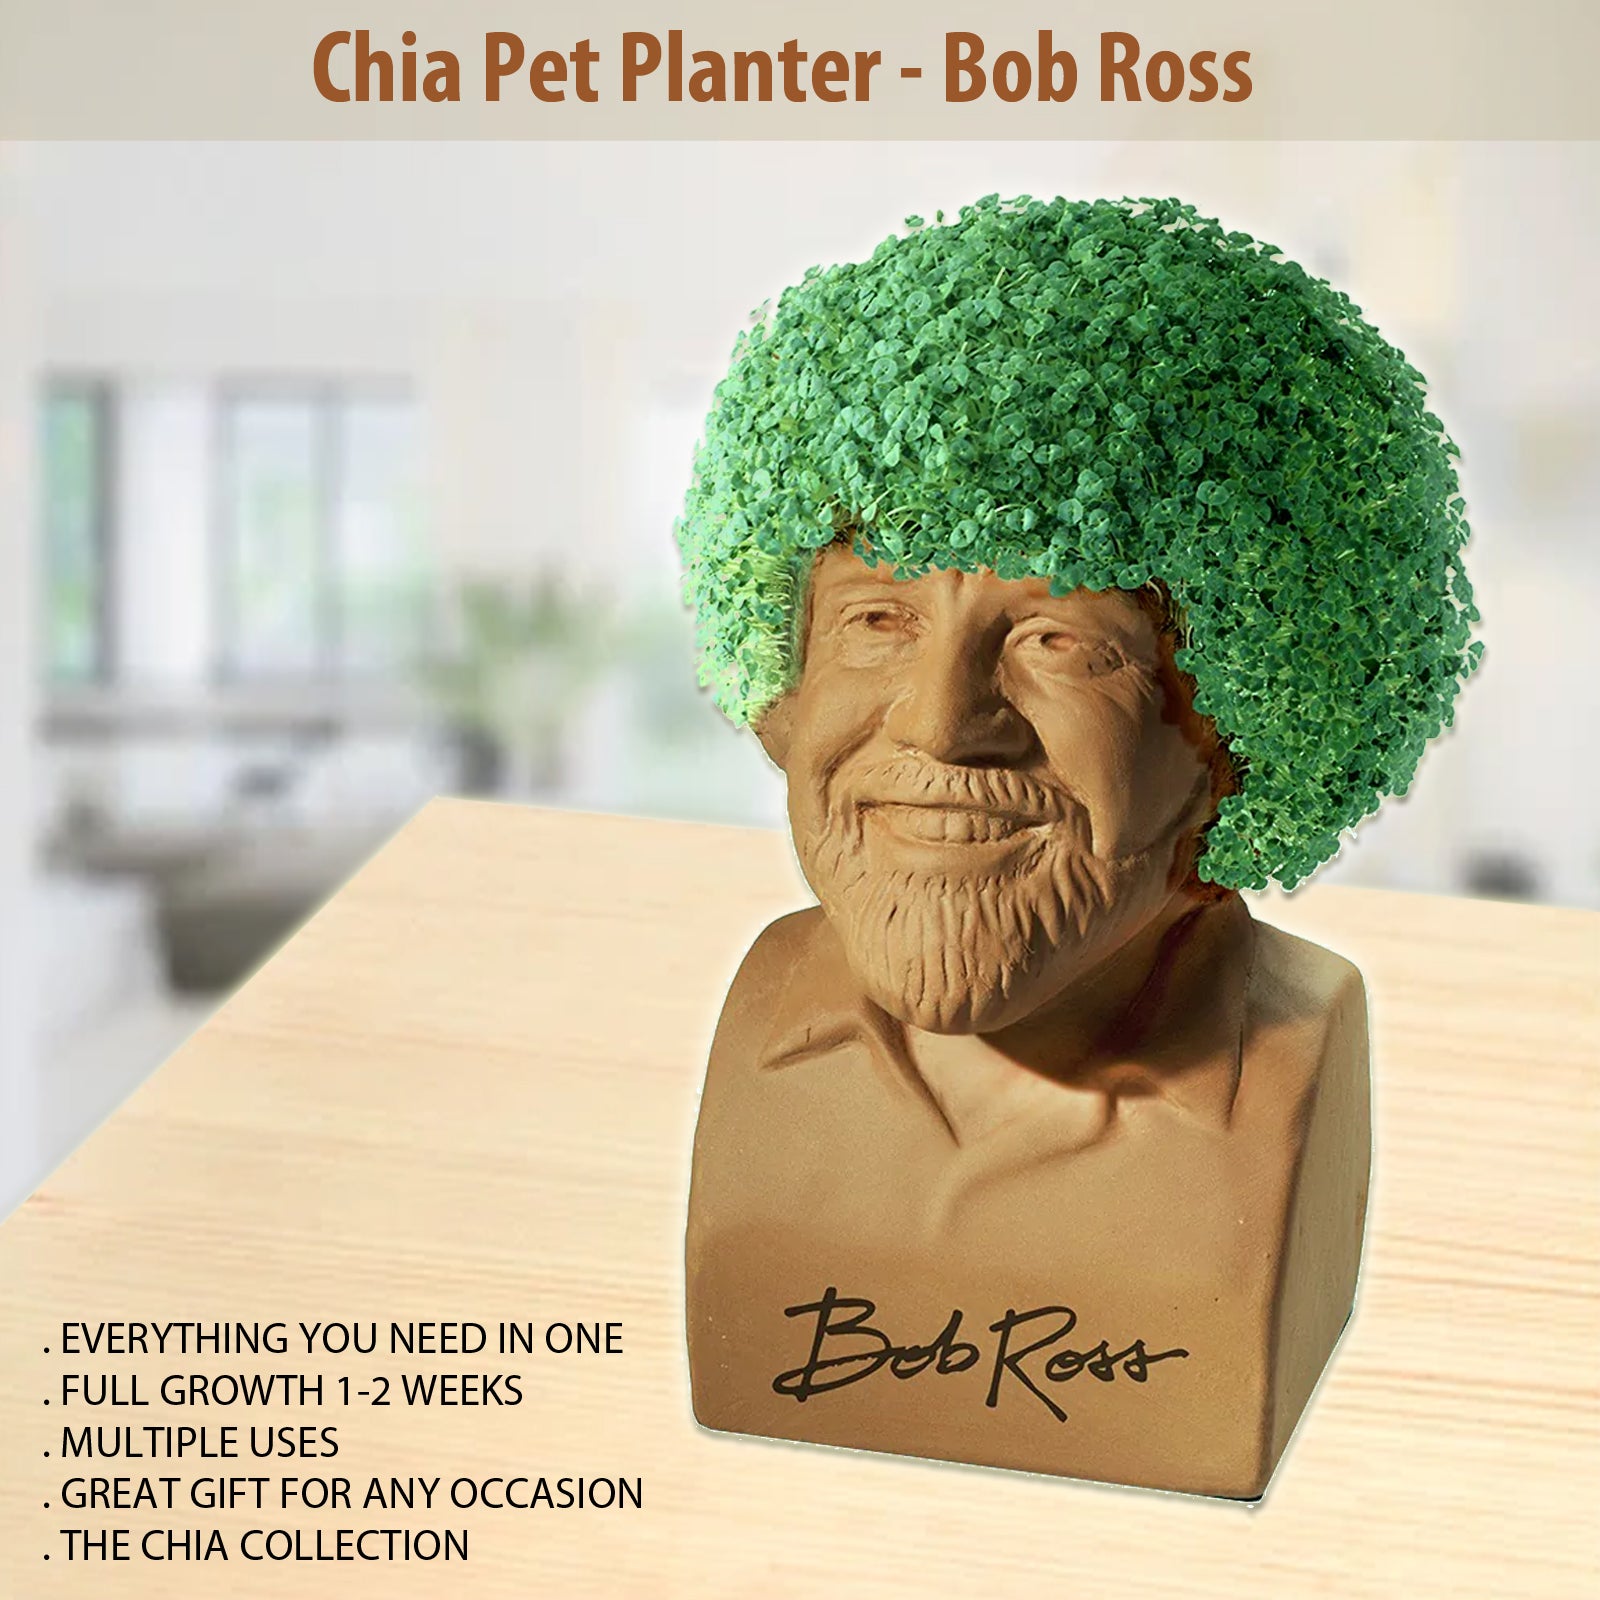 Chia Pet Planter Home Decor Pottery Products - Bob Ross